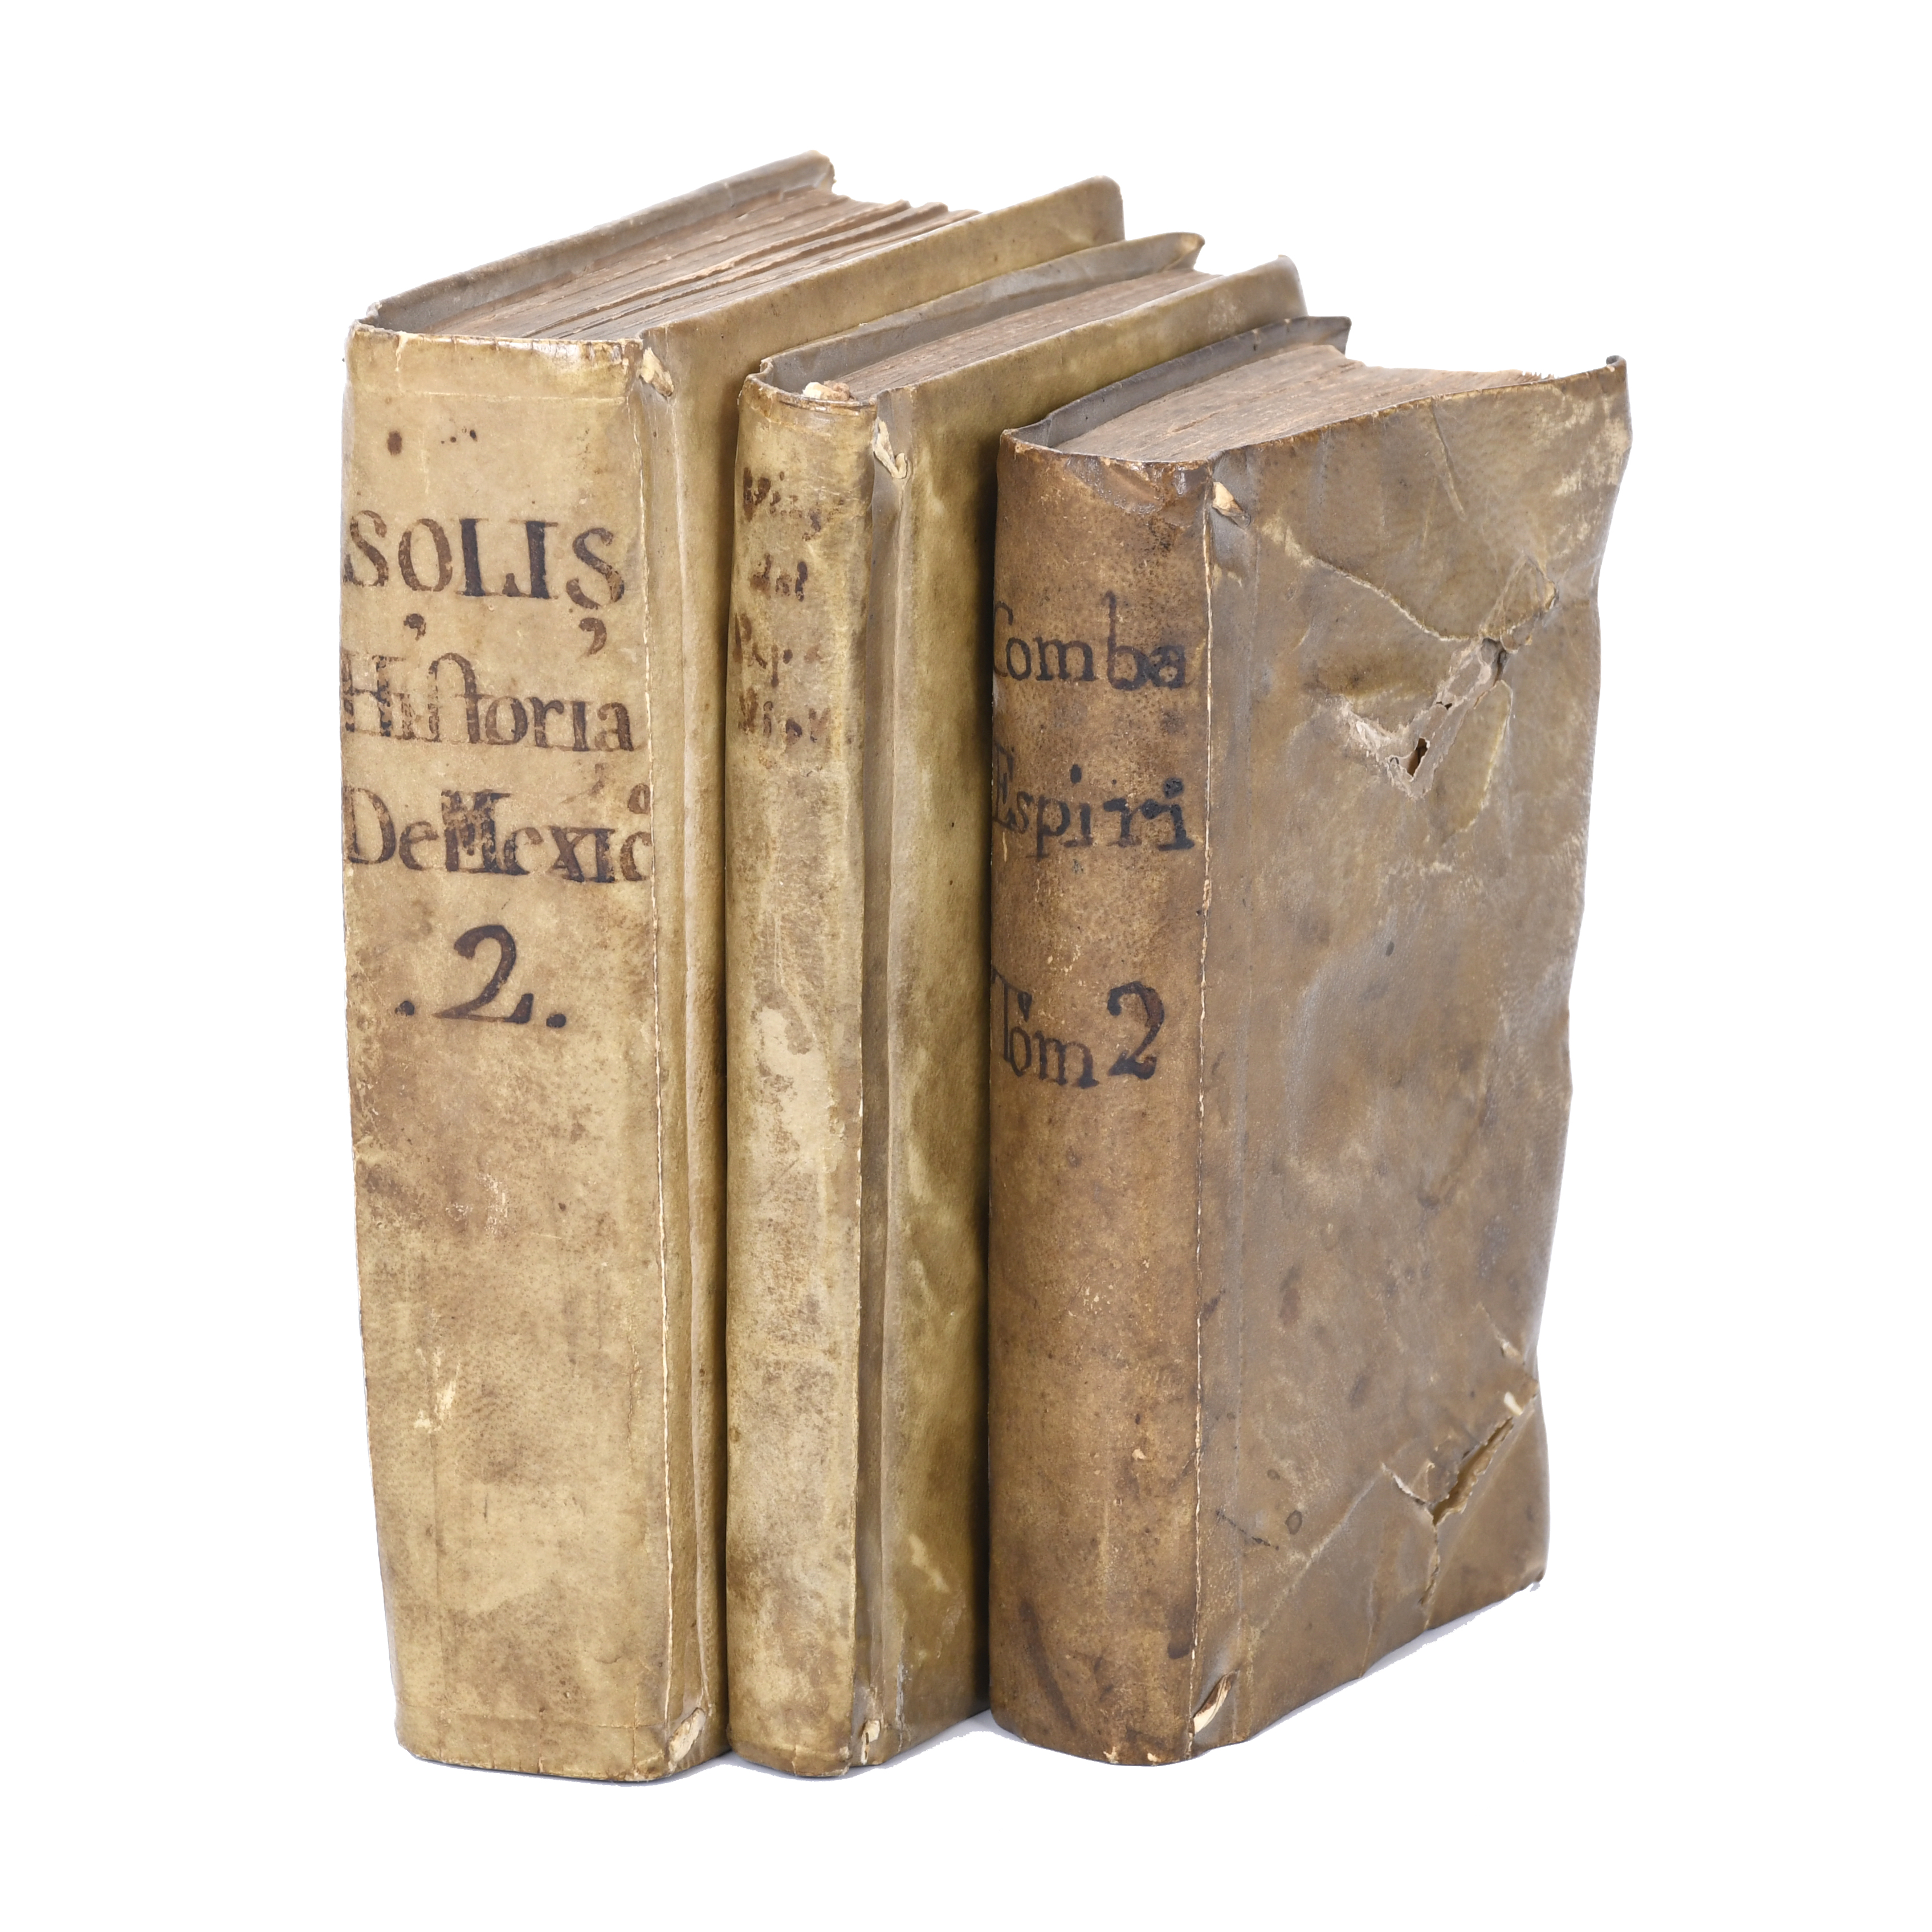 THREE 18TH CENTURY BOOKS ON VARIOUS SUBJECTS.